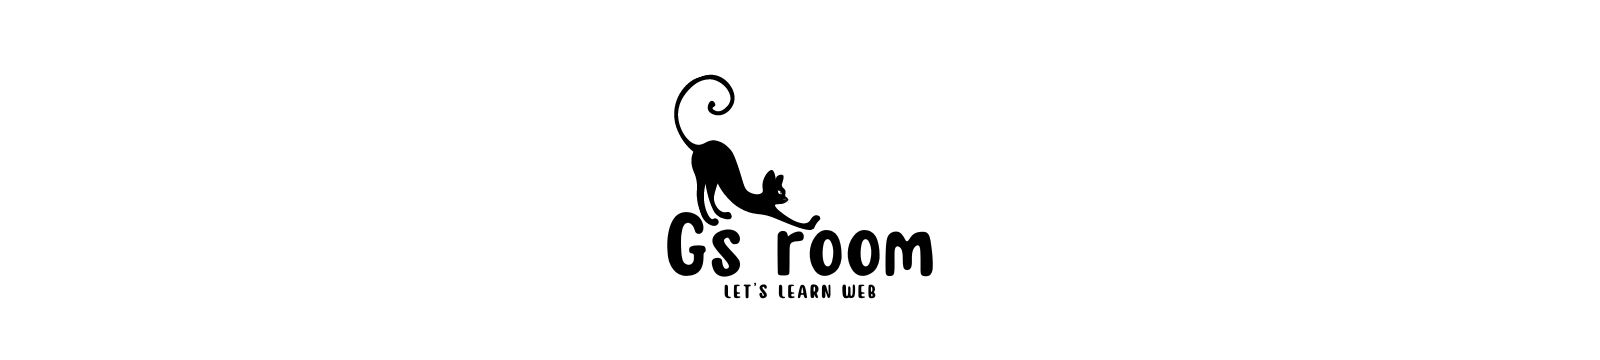 Wordpressを学ぶ G's room